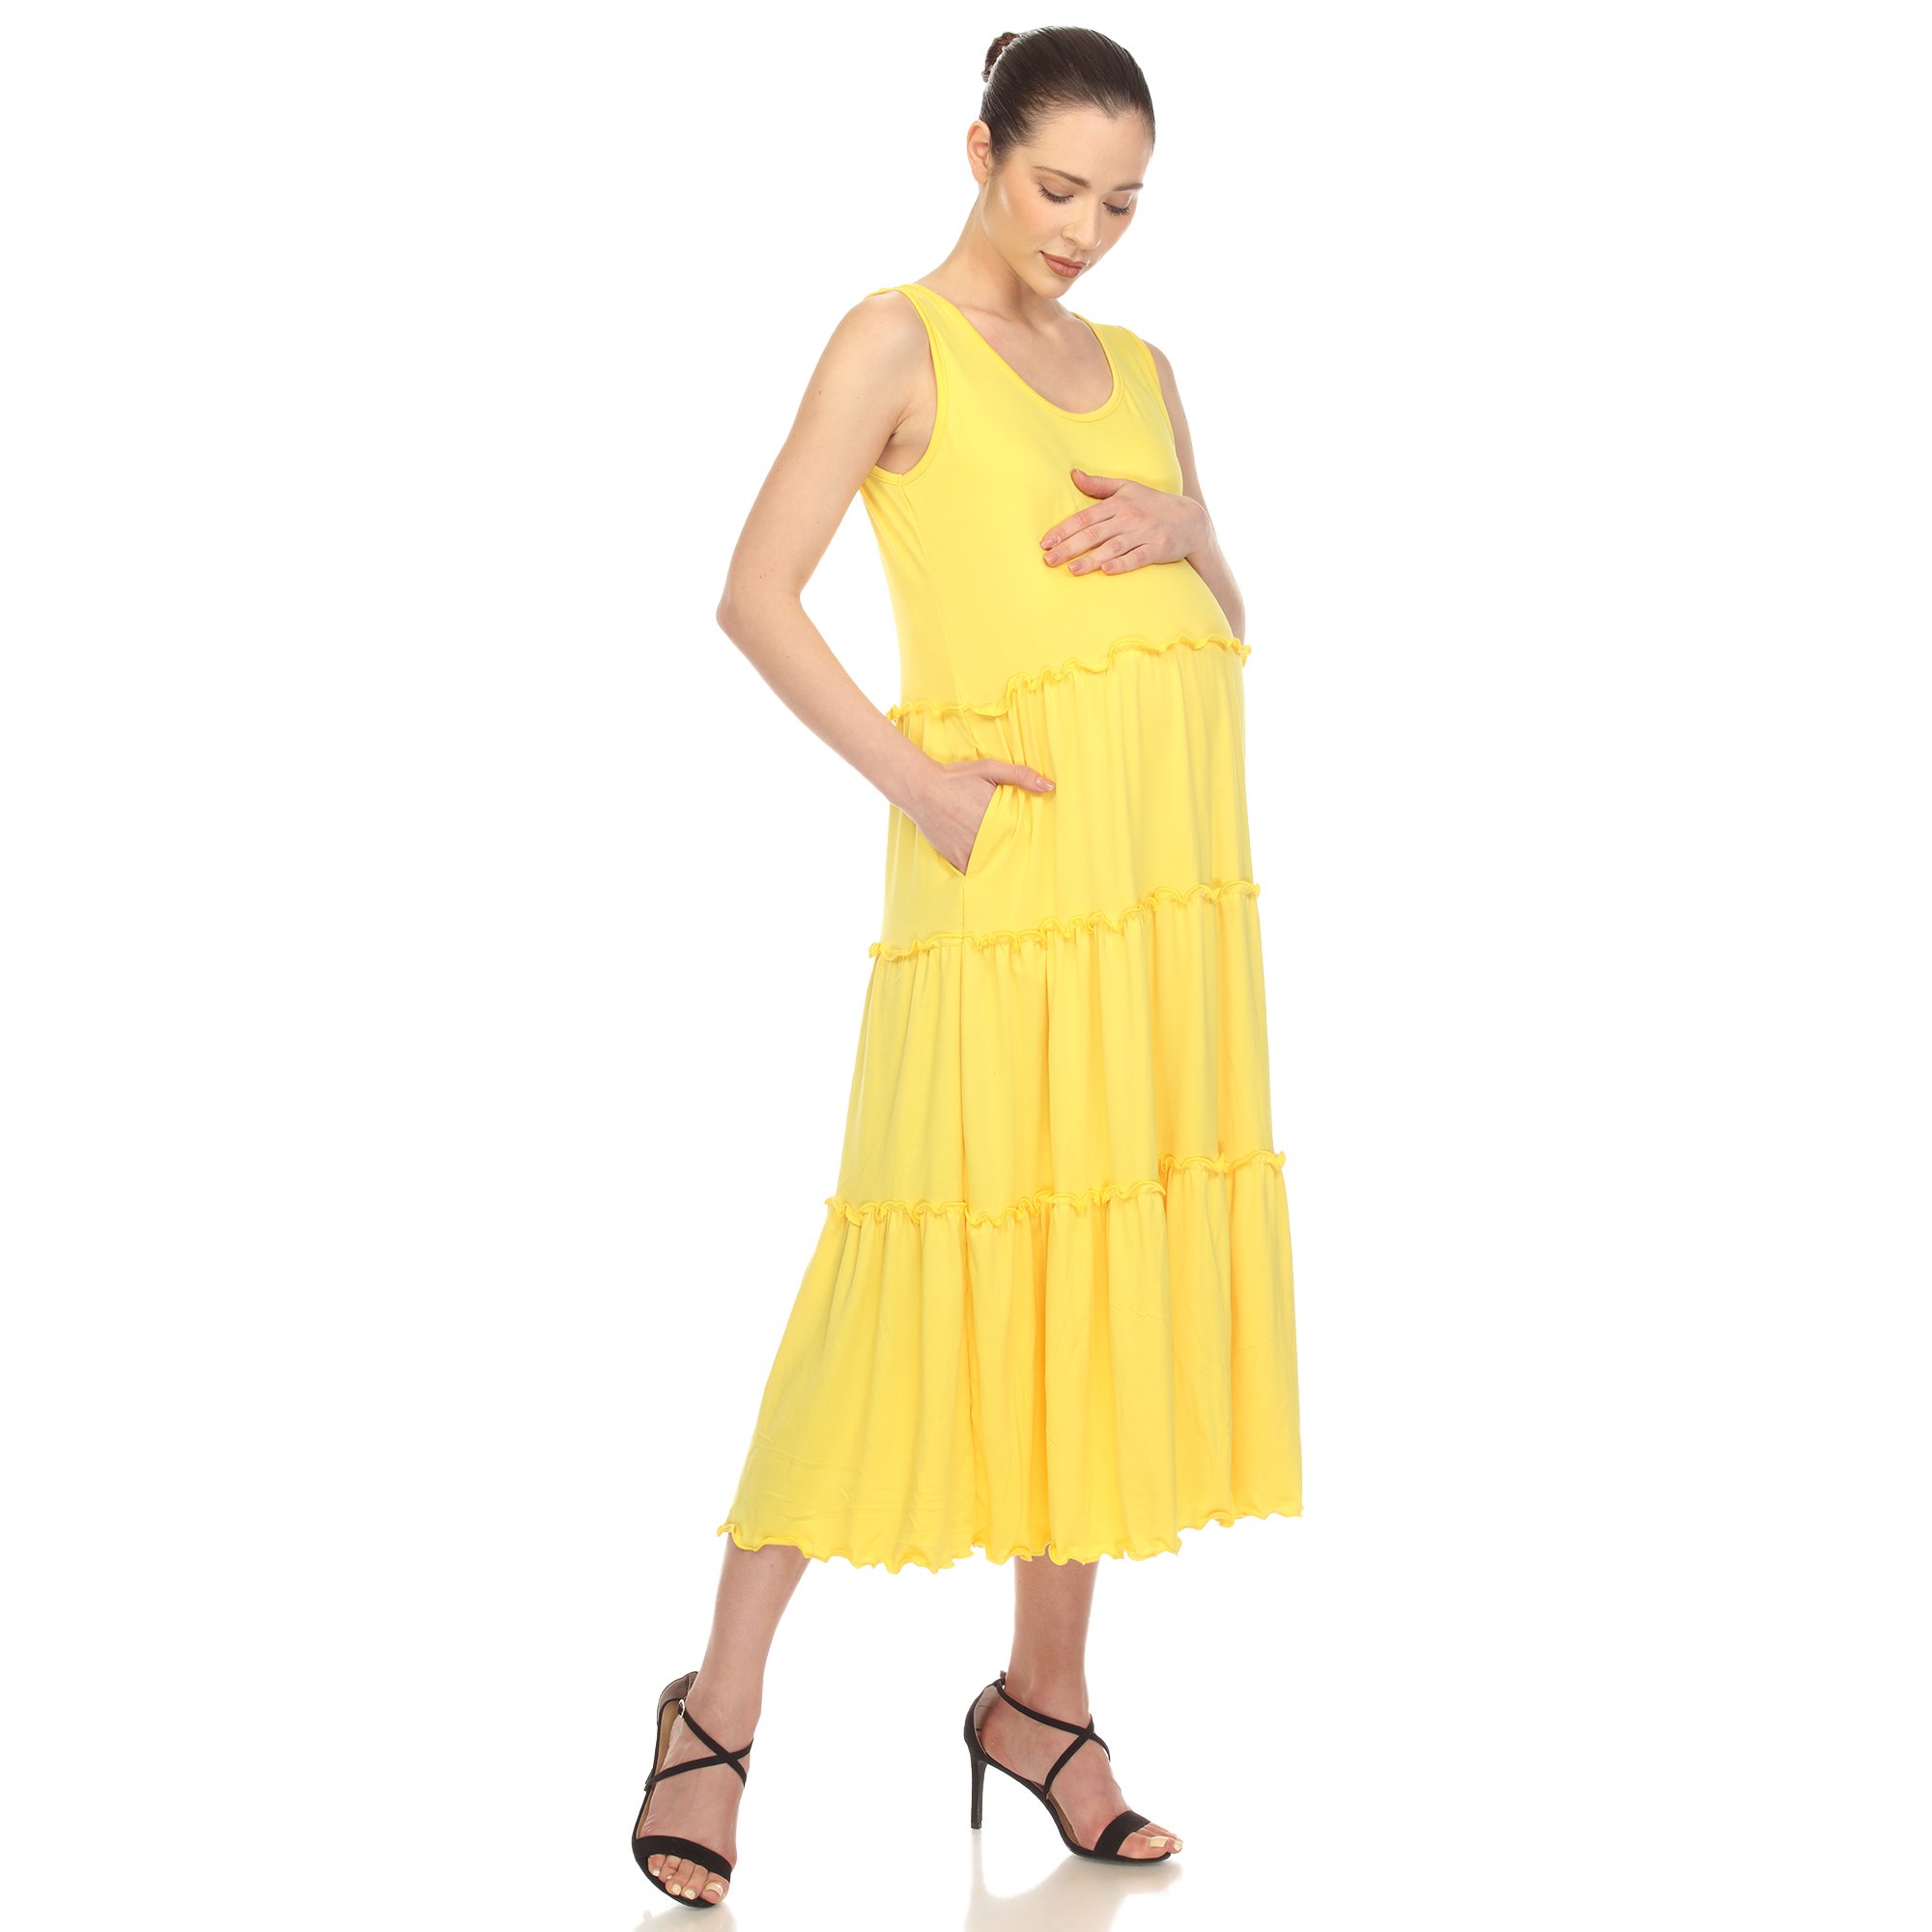 White Mark Women's Maternity Scoop Neck Tiered Midi Dress - Canary Yellow, 3X